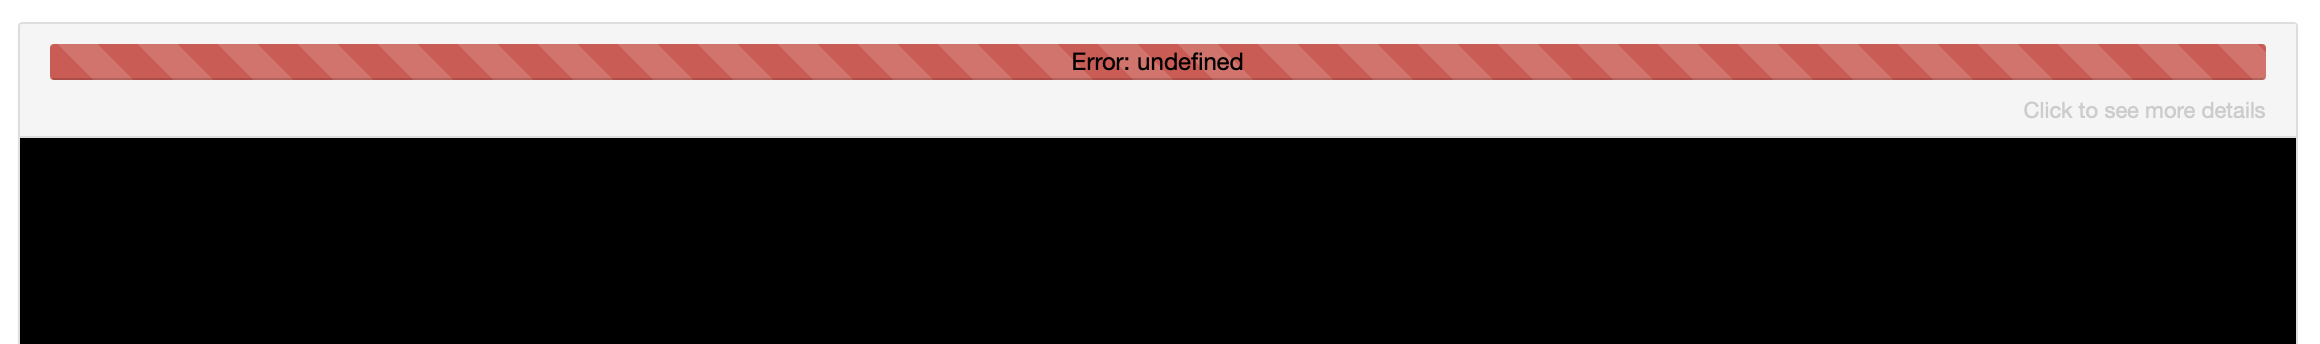 error undefined example